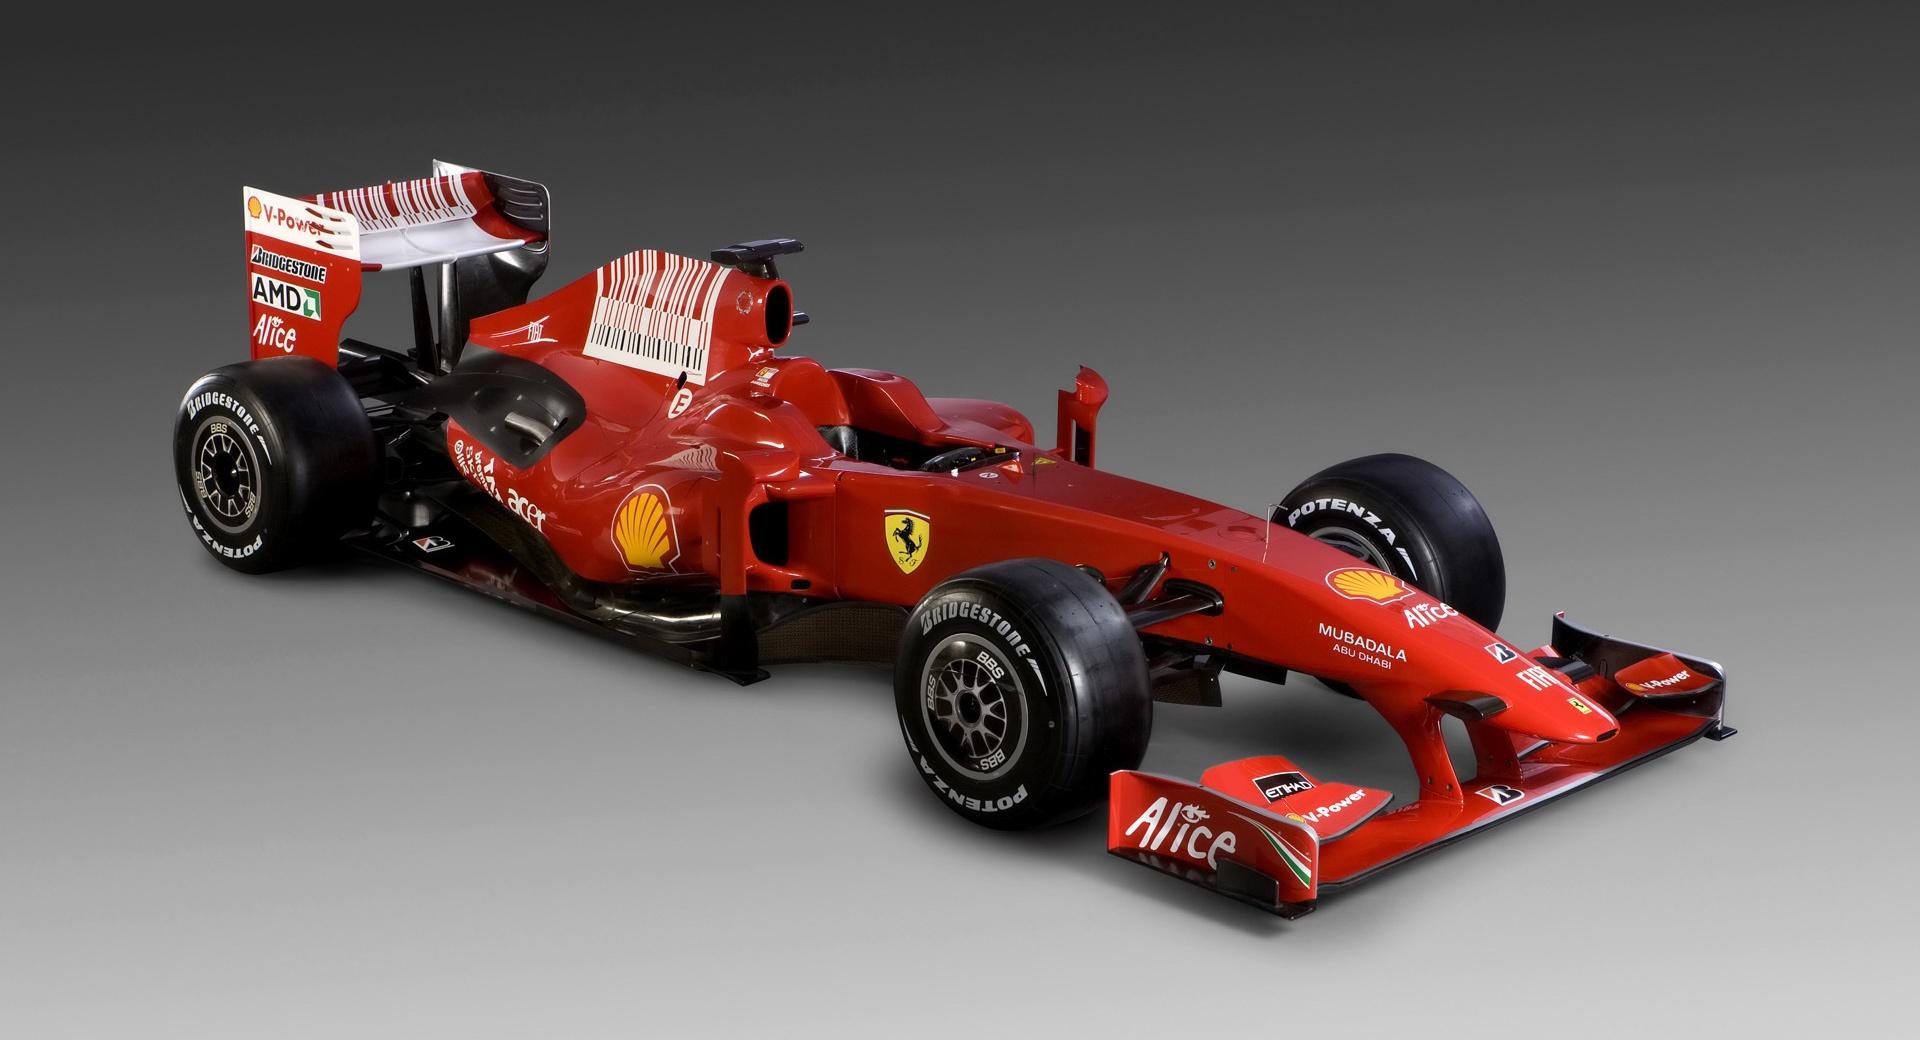 Formula 1 Ferrari Car at 1600 x 1200 size wallpapers HD quality